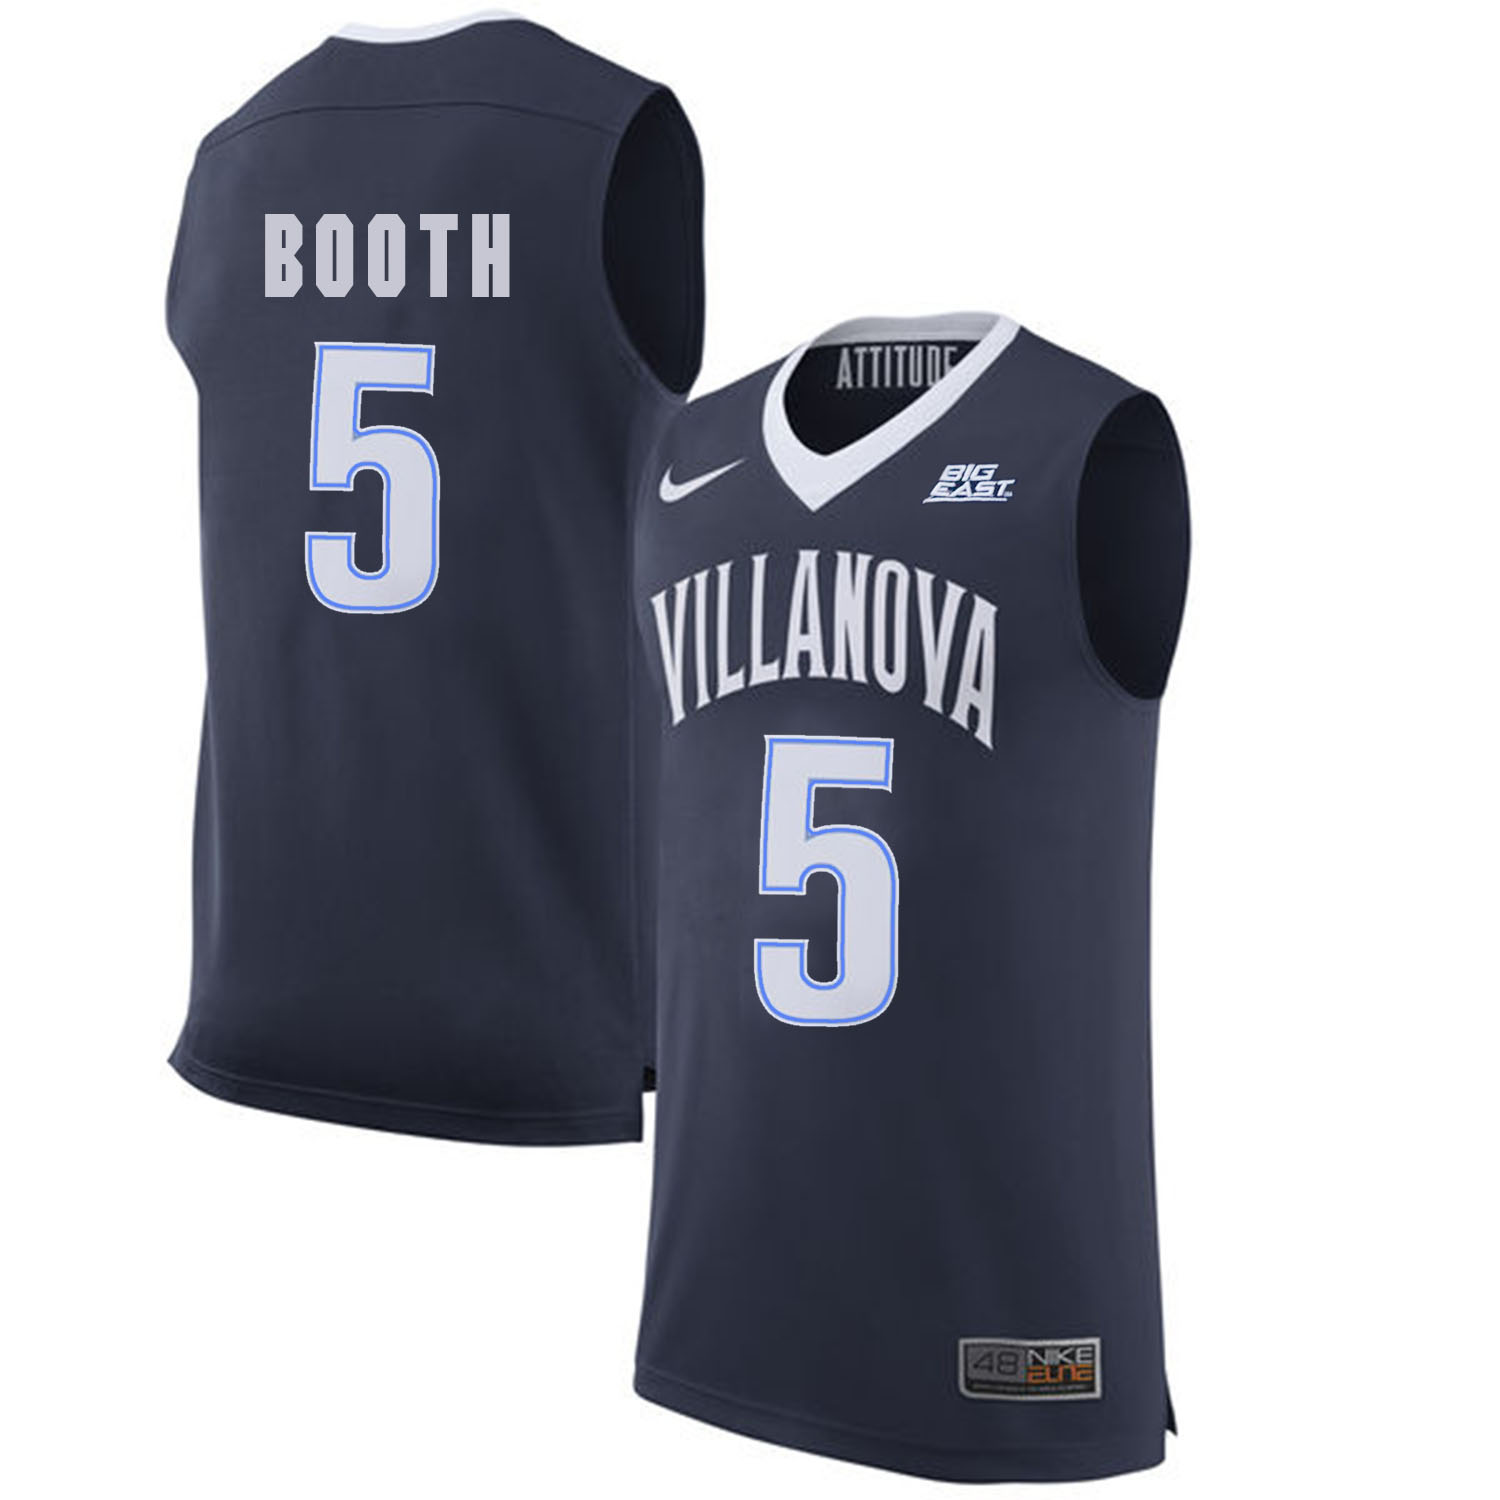 Villanova Wildcats 5 Phil Booth Navy College Basketball Elite Jersey